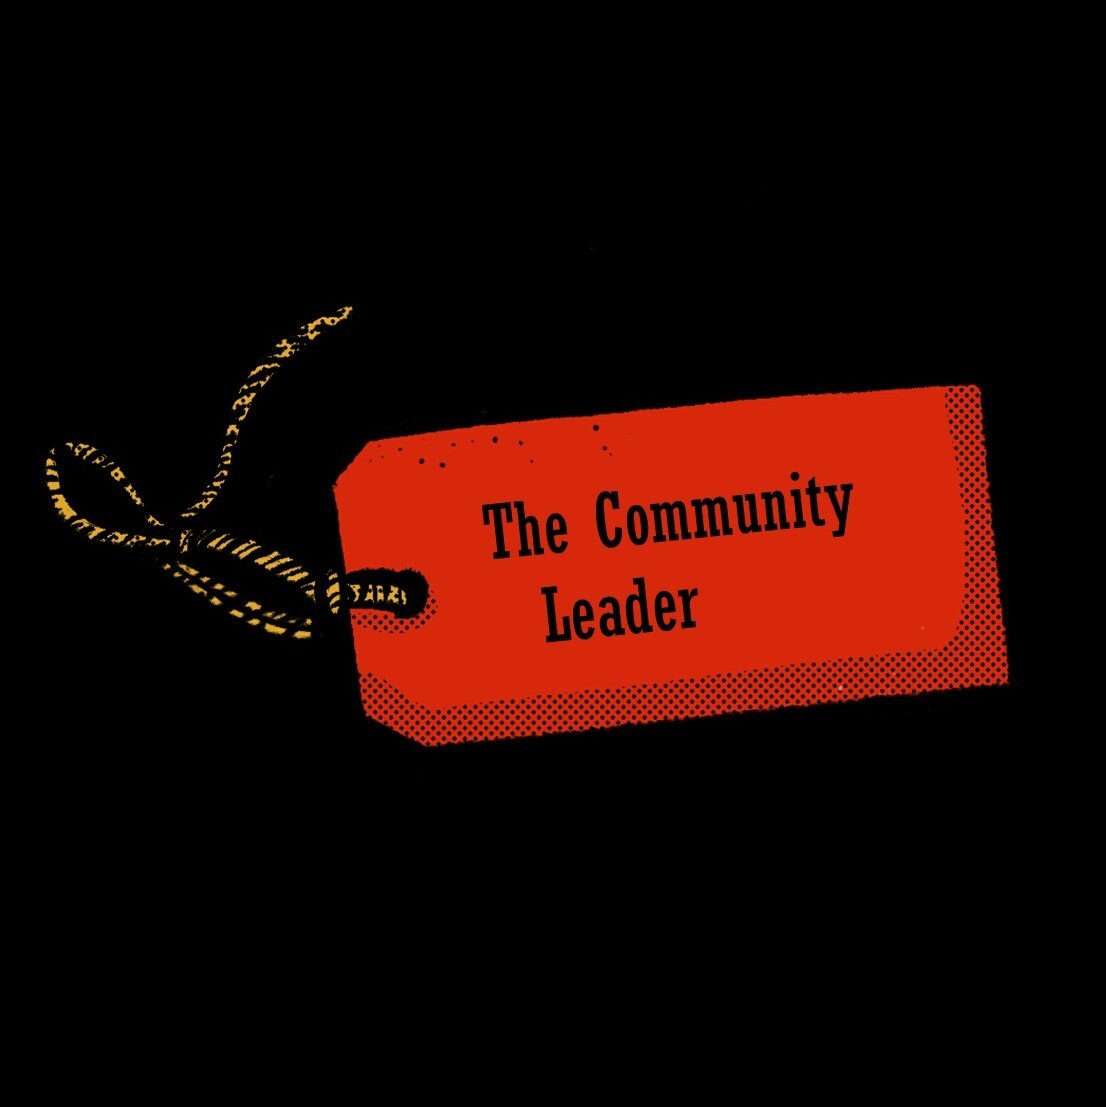 Episode 5: The Community Leader